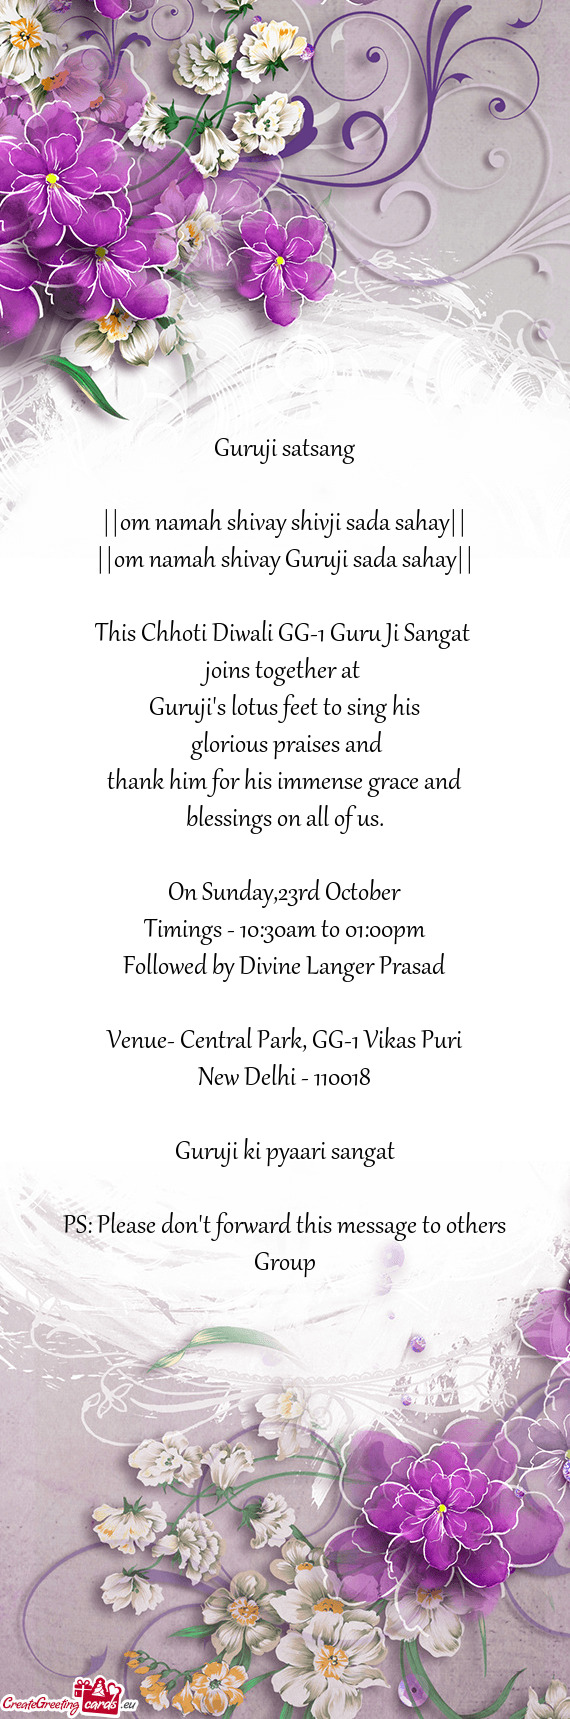 This Chhoti Diwali GG-1 Guru Ji Sangat